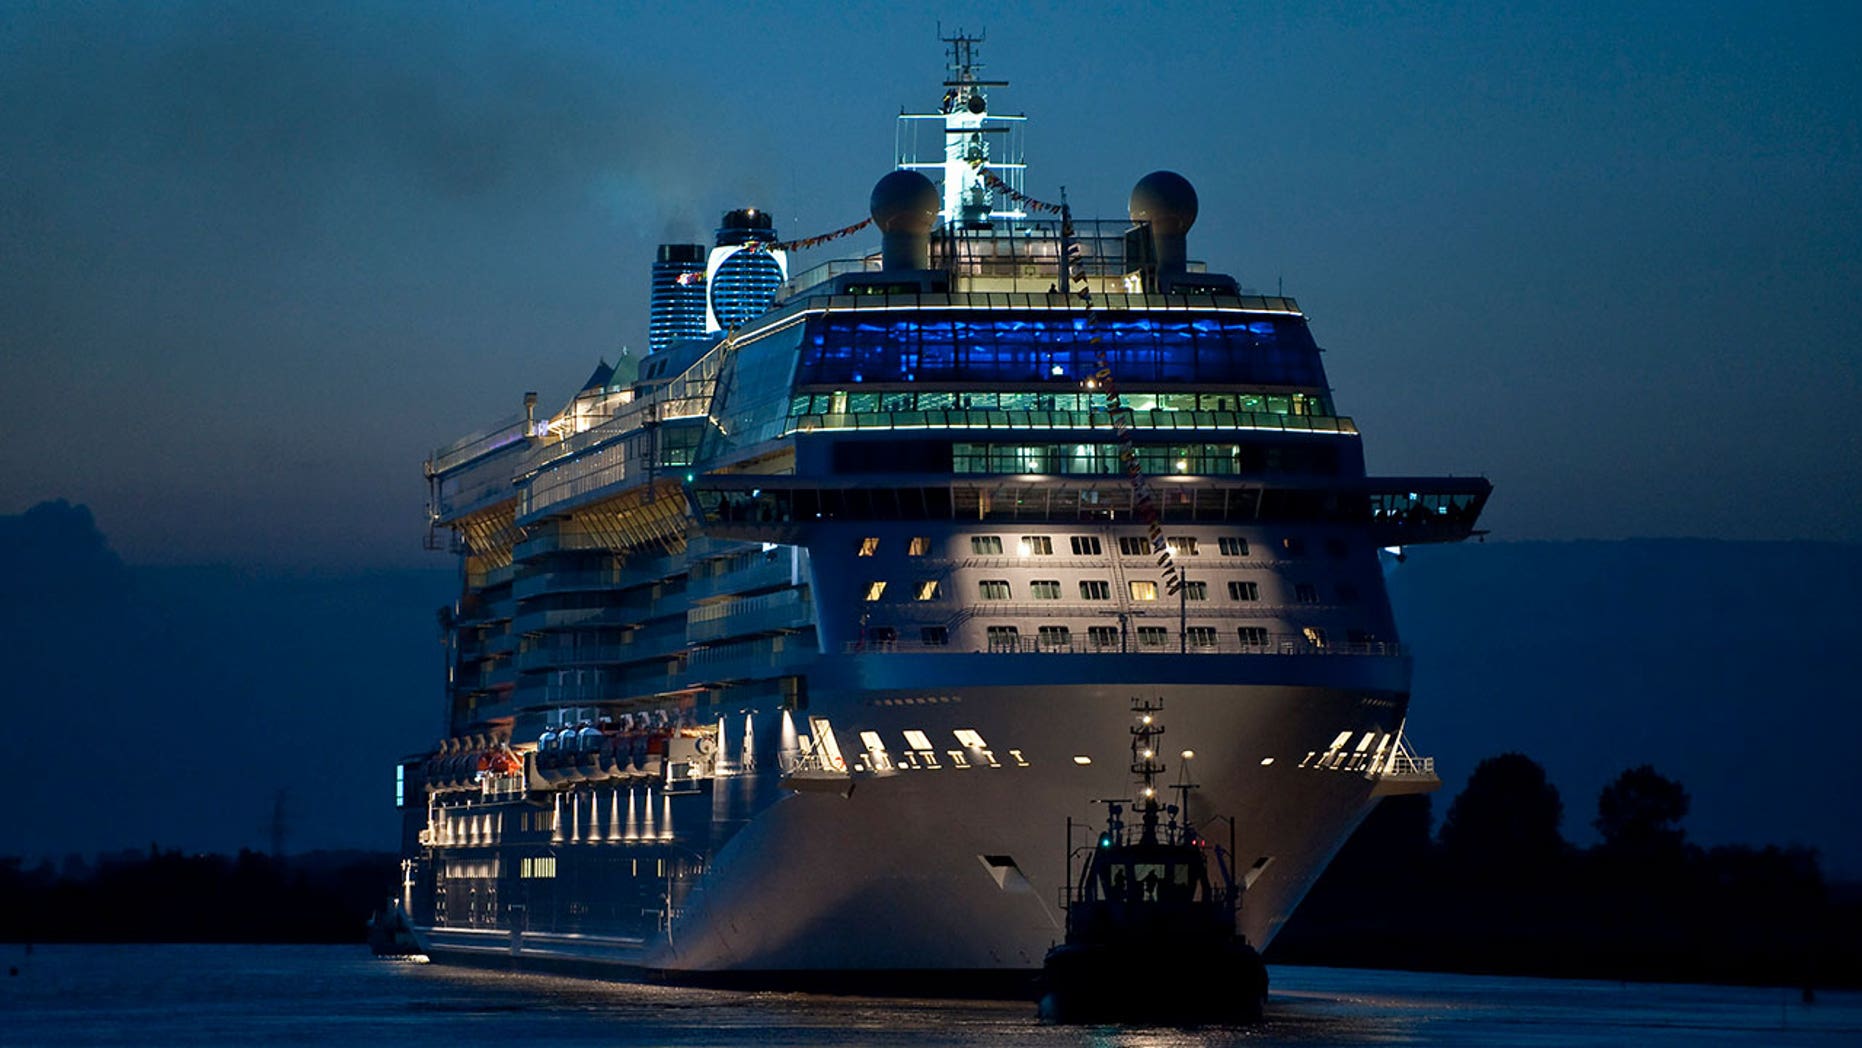 Cruise Passenger On Sinking Tour Boat Recalls Scary